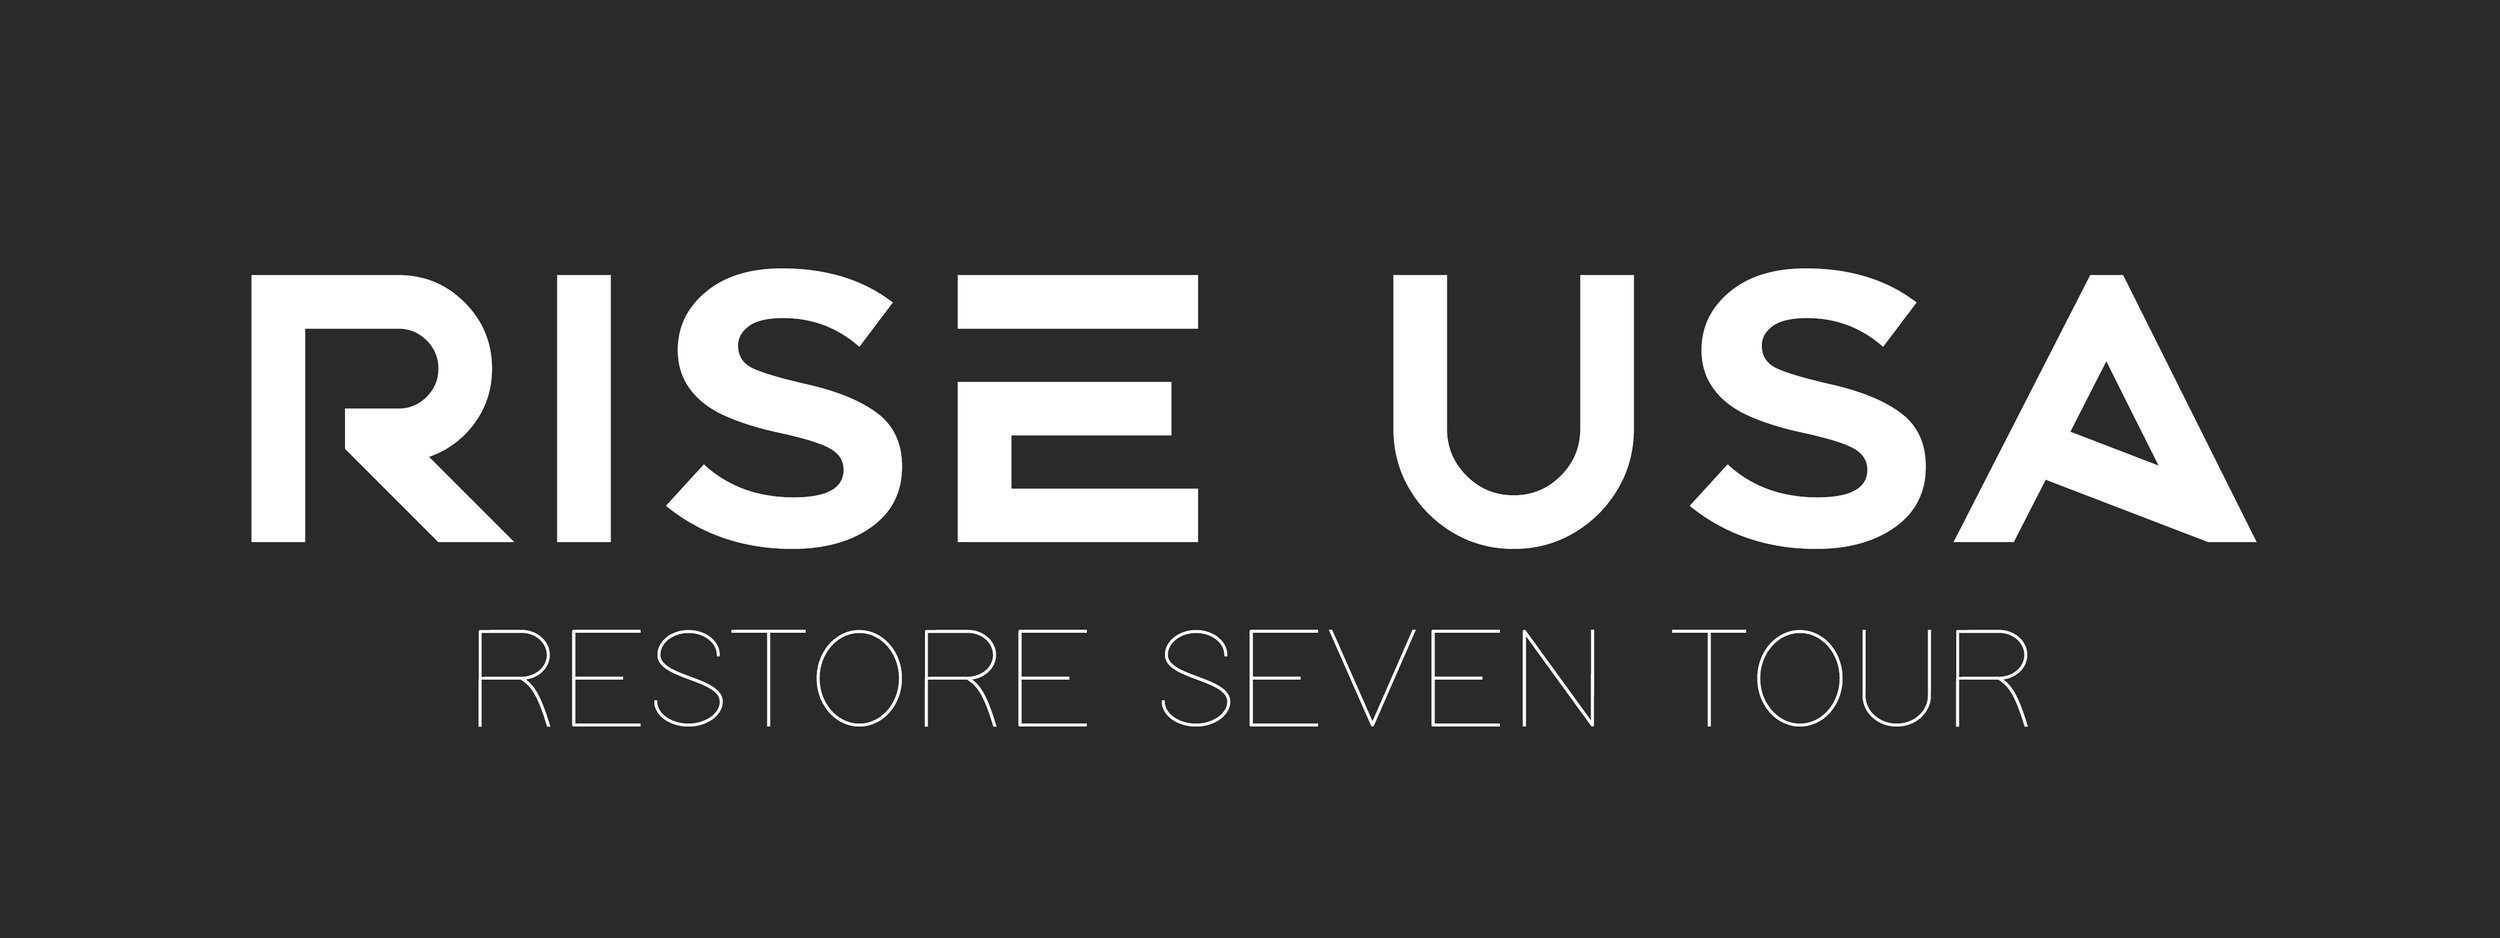 Rise USA Tour Tickets — Restore7